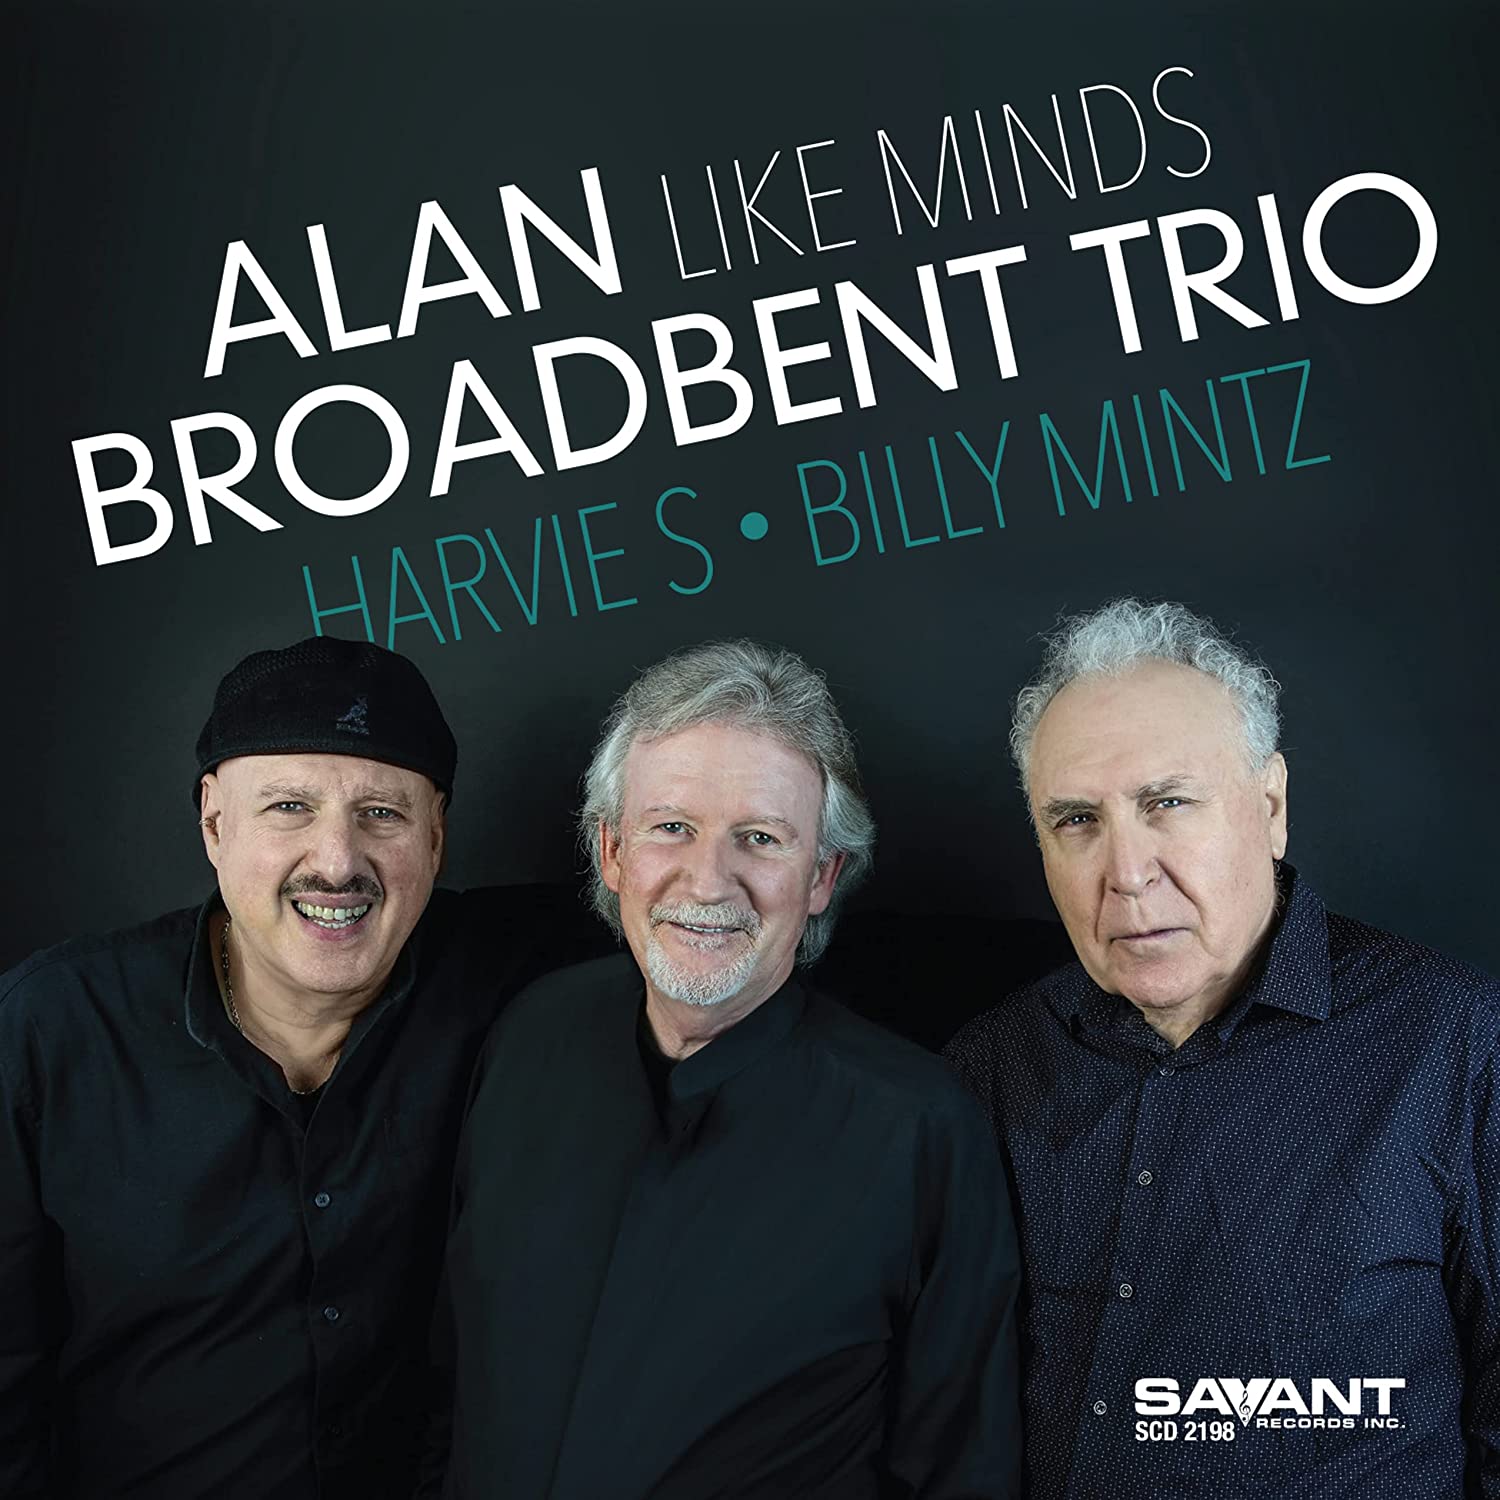 Alan Broadbent Trio / Like Minds